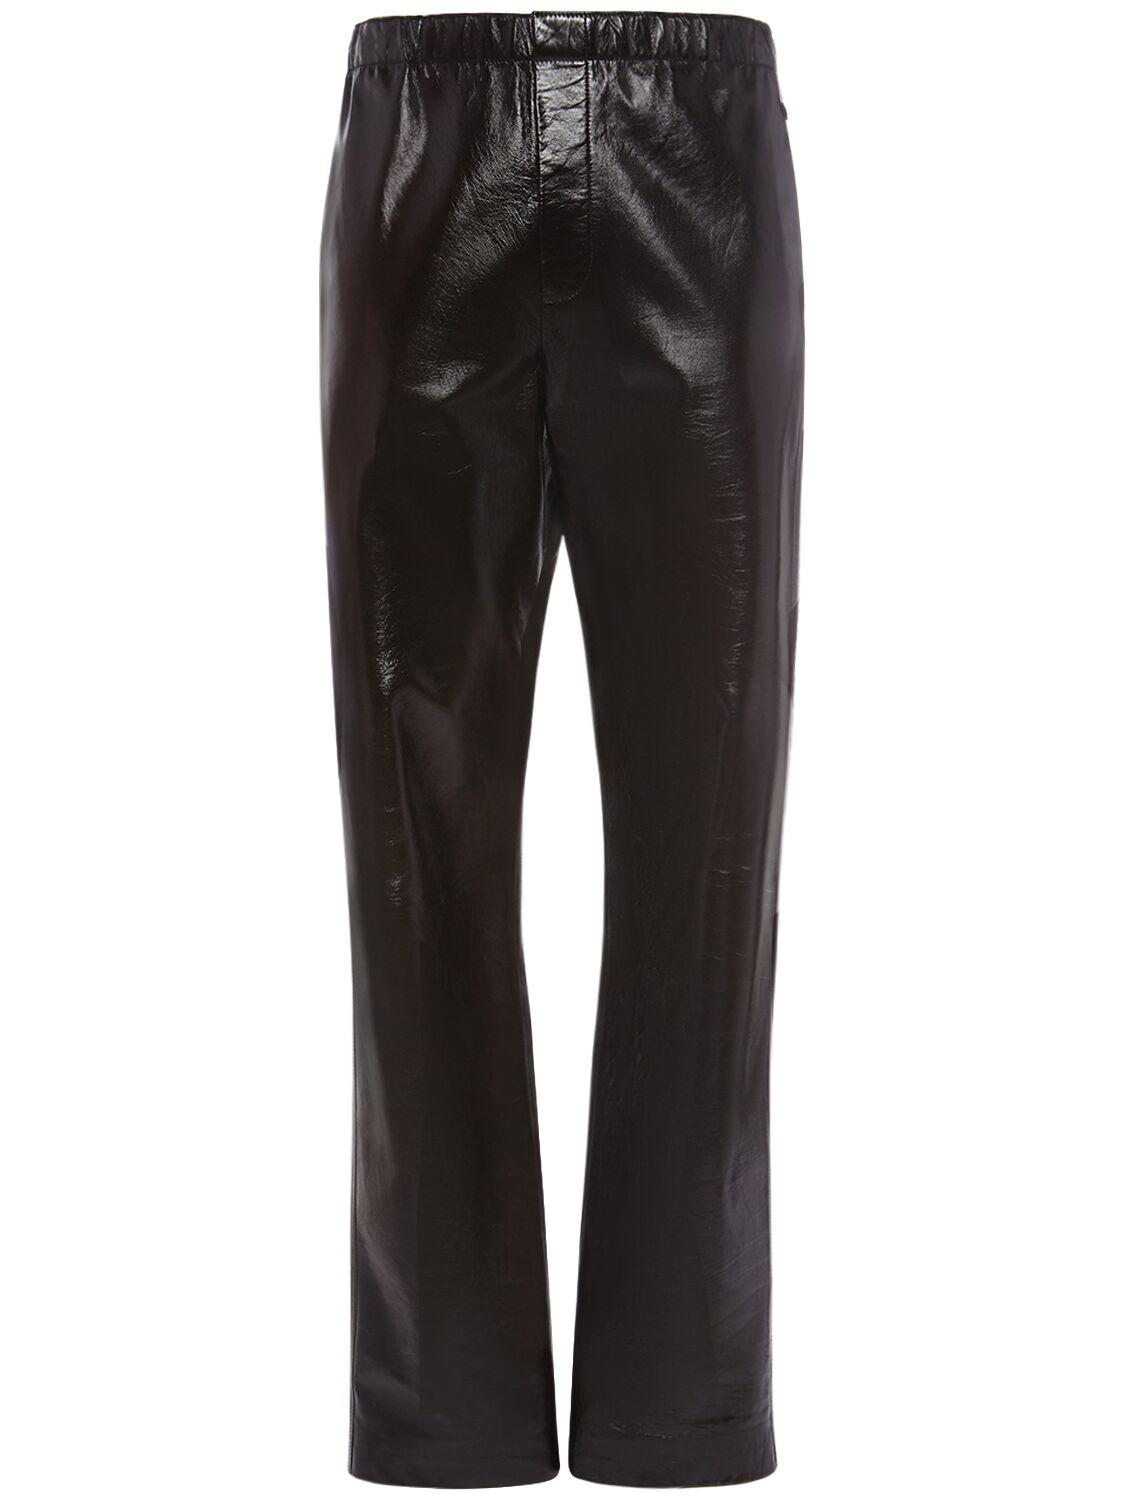 Image of Shiny Leather Elasticated Pants